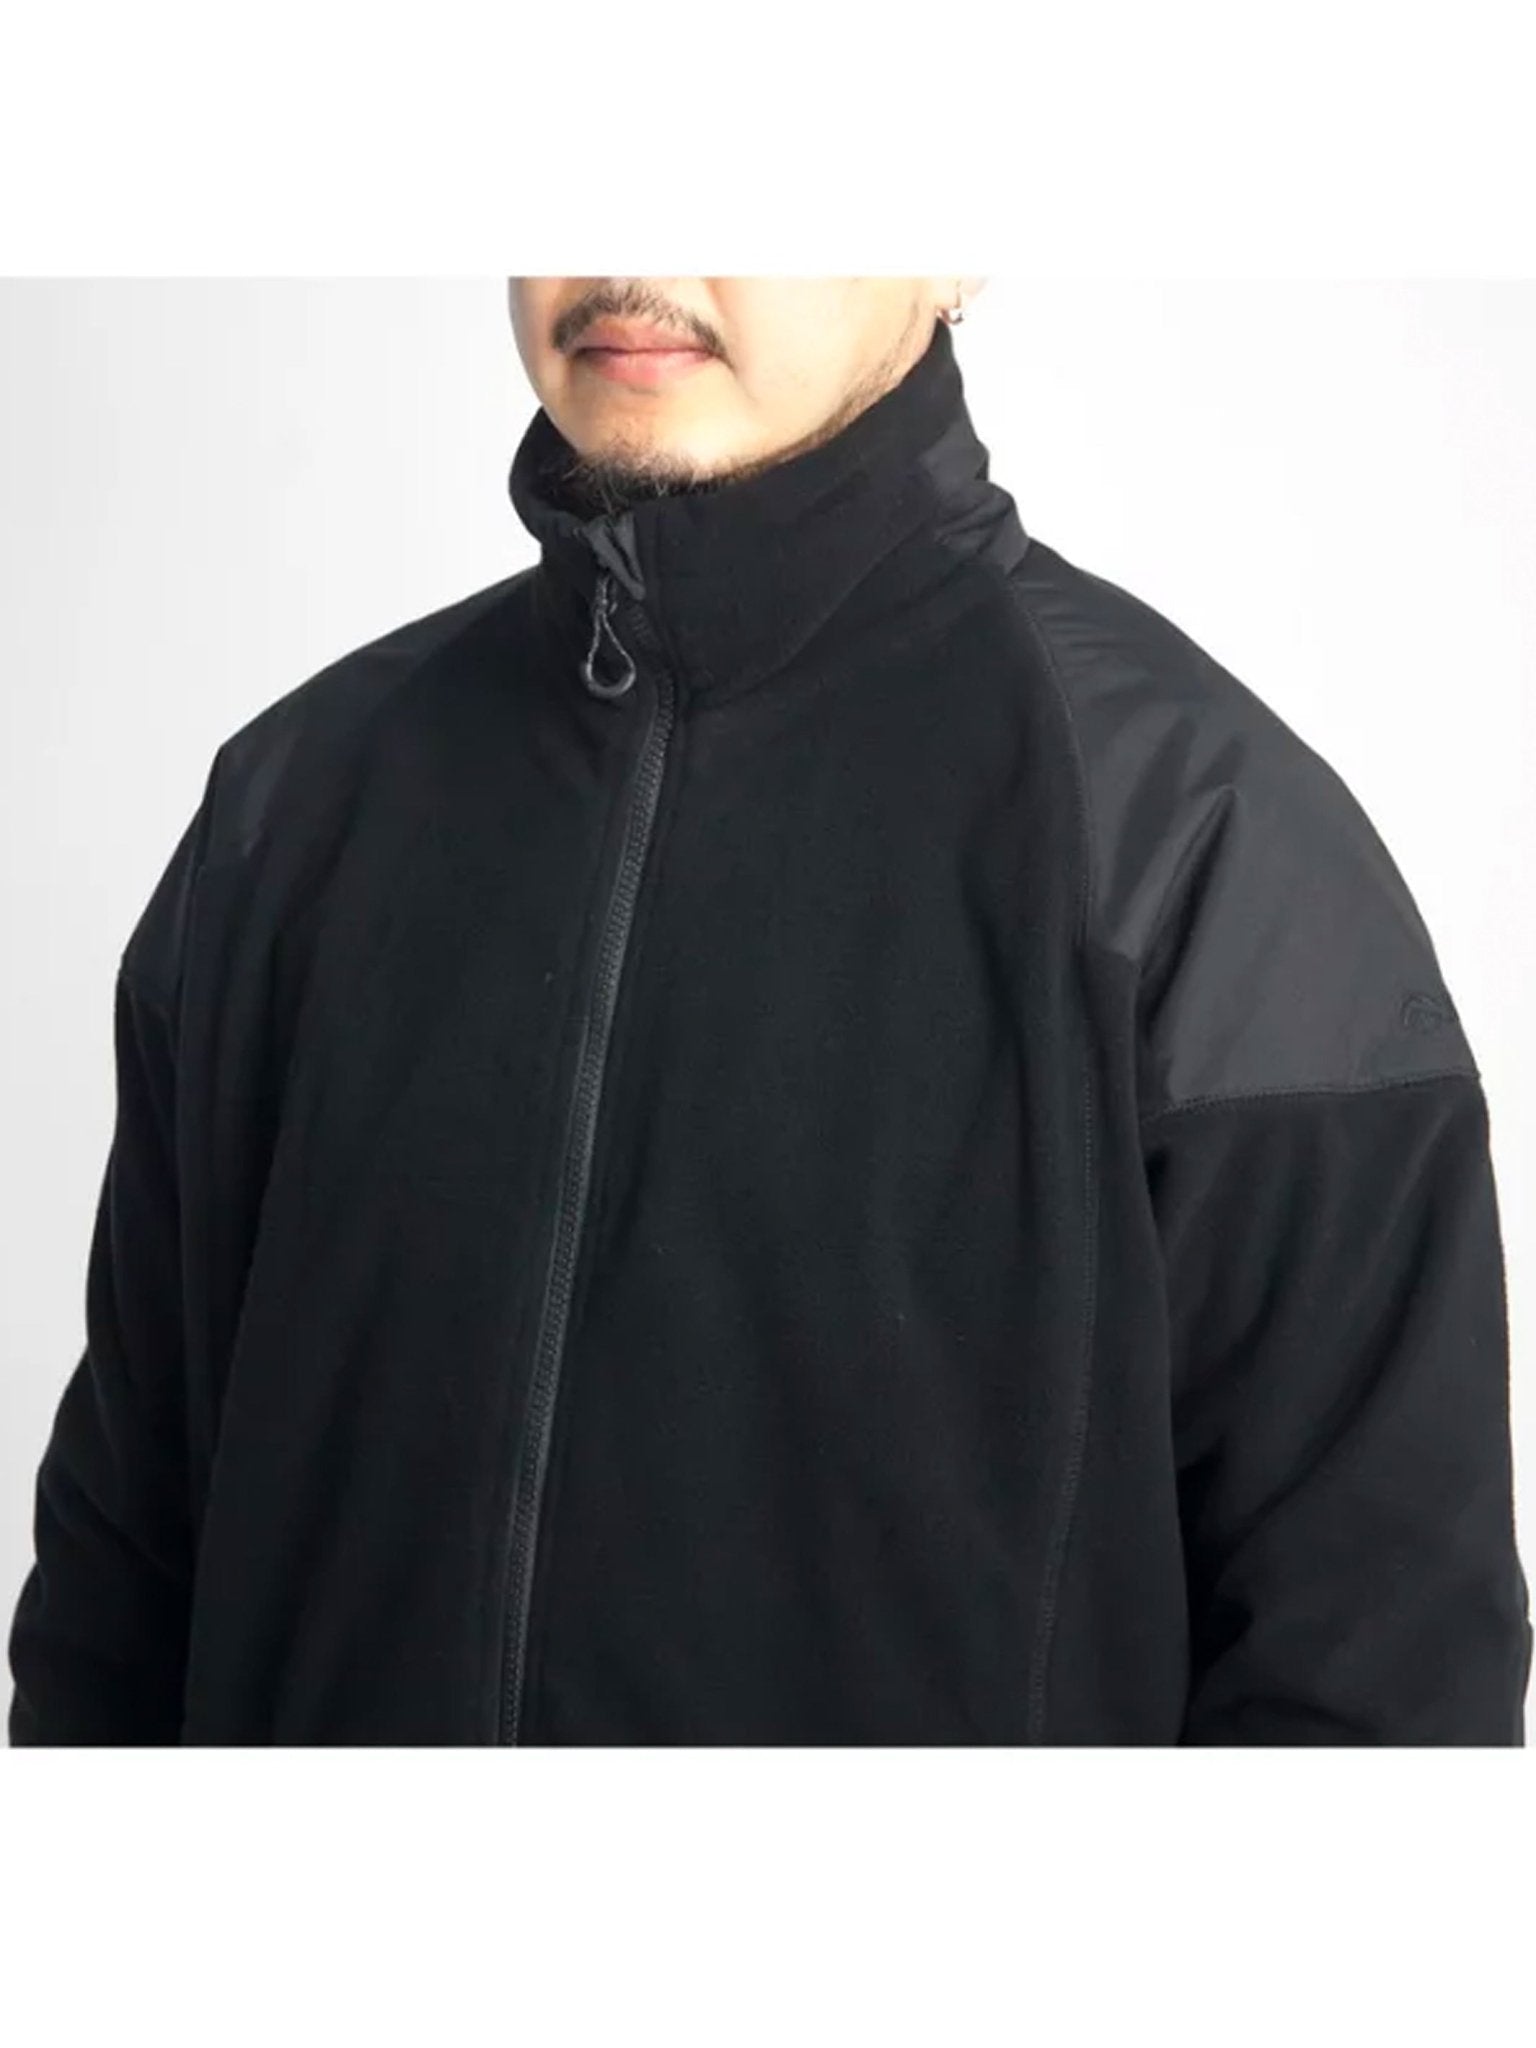 4elementsclothingKeelaKeela Outdoors - Keela Genesis Mens Waterproof Fleece Jacket, Windproof, breathable, reinforced elbows and shouldersOuterwear31630-100000-0-111